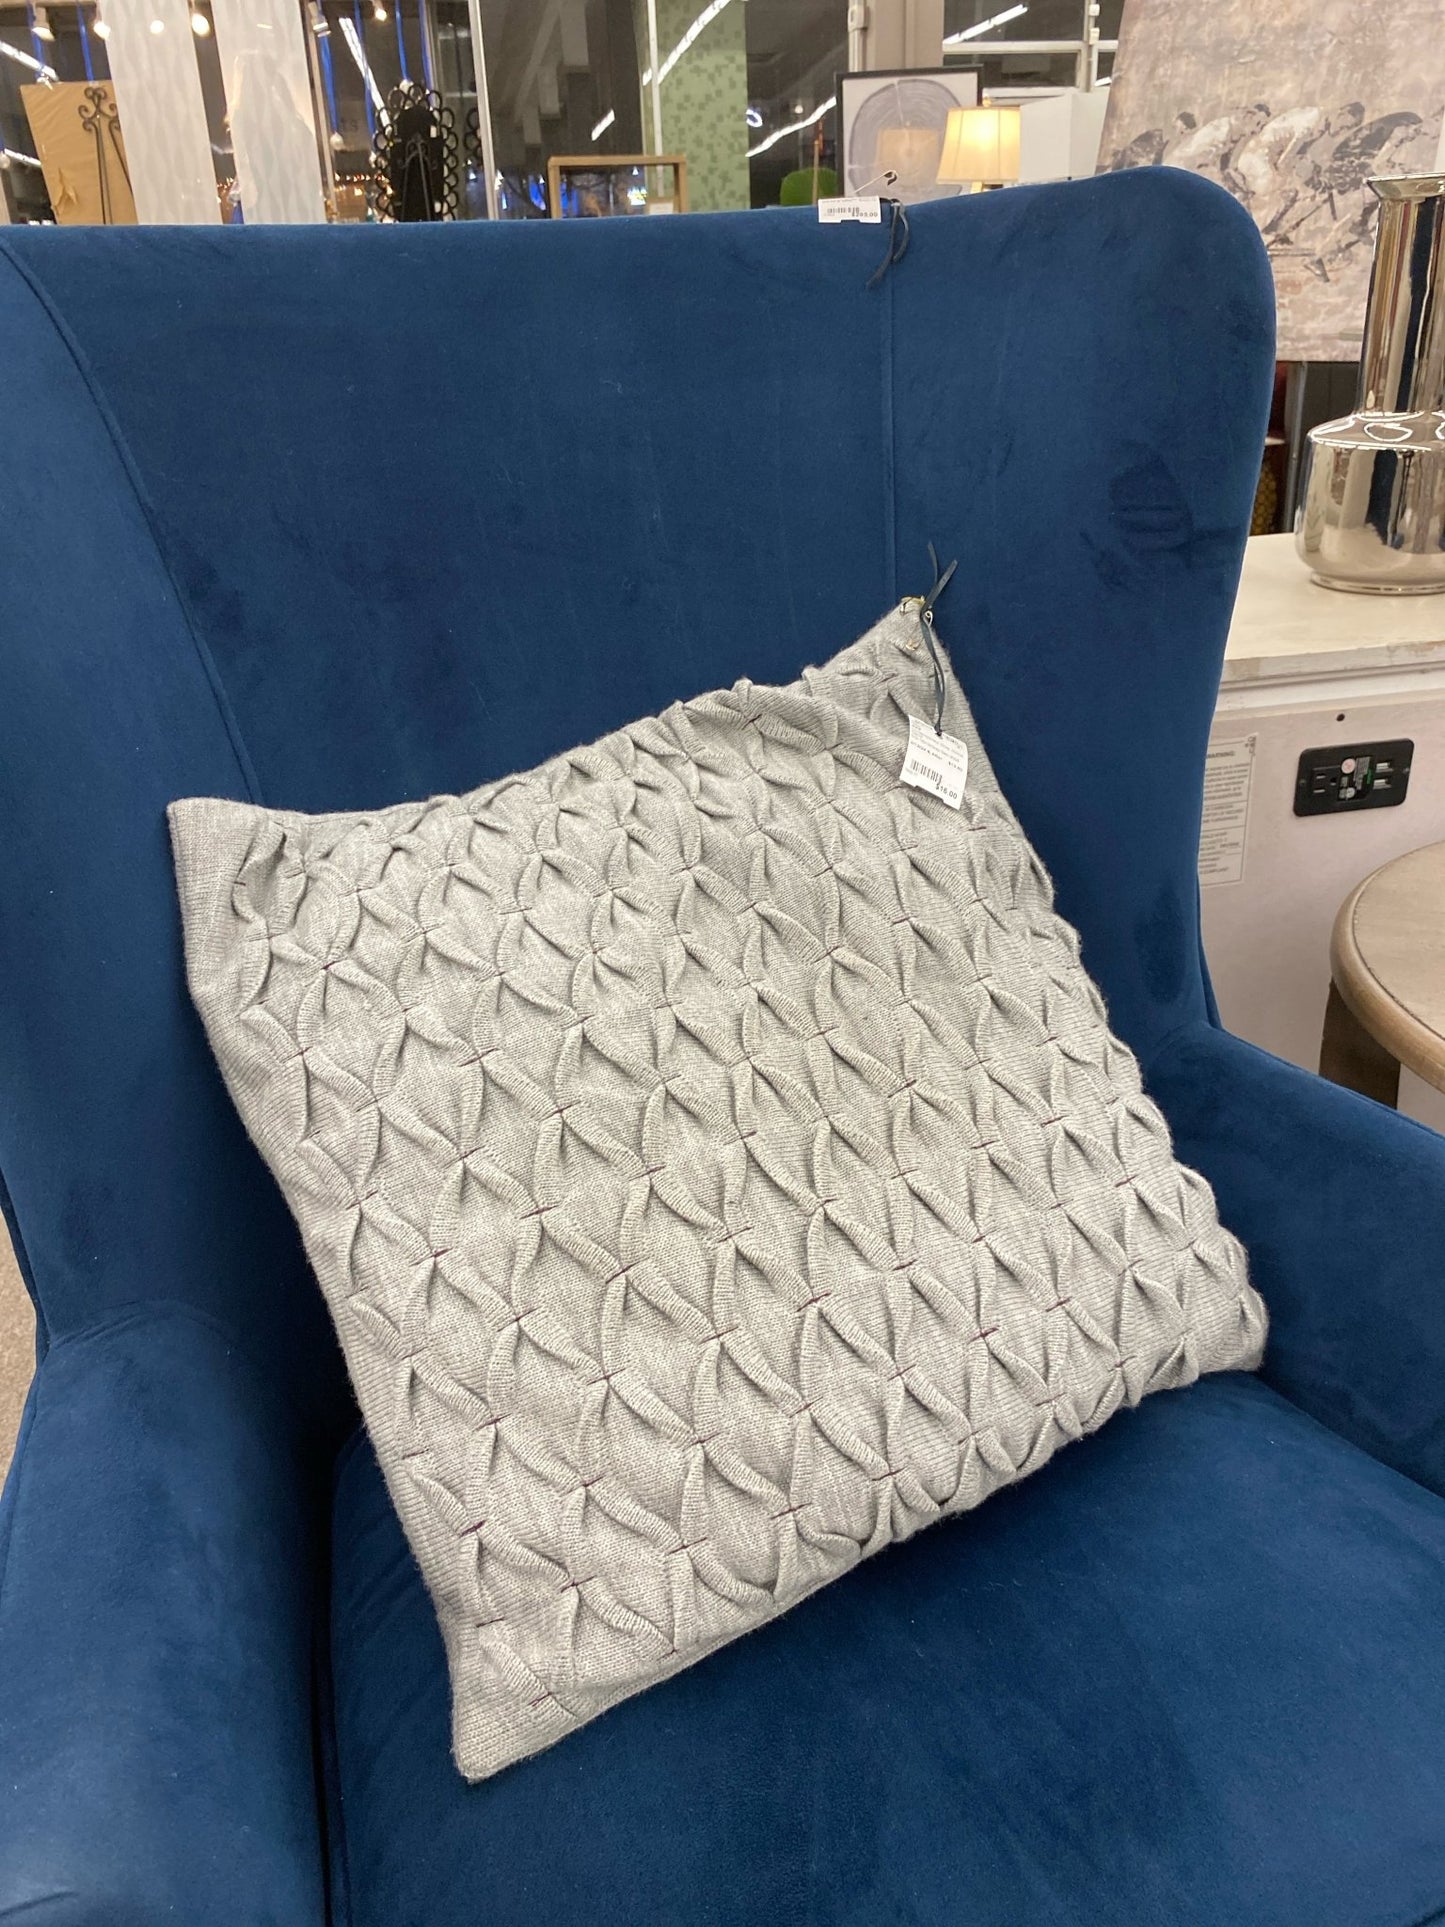 IKEA Pillow - Divine Consign Furniture